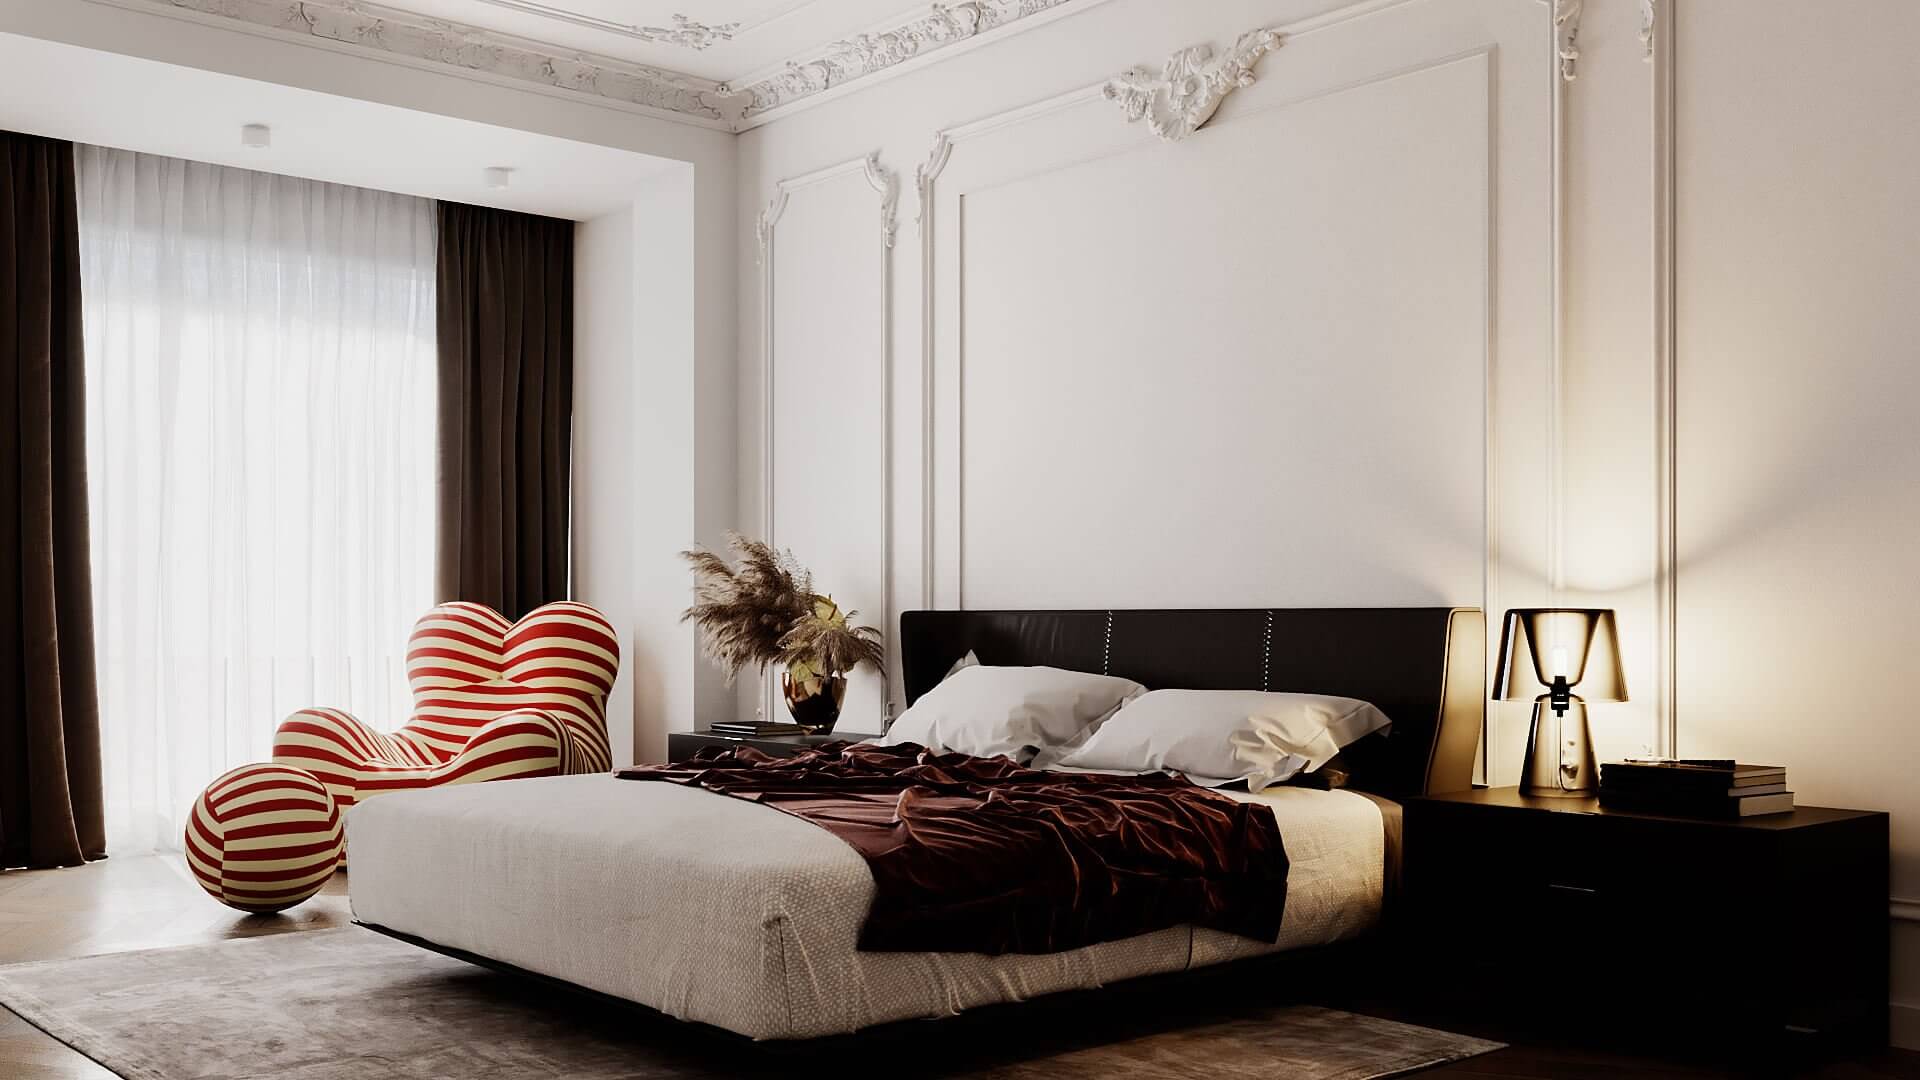 Bernardazzi Apartment bedroom design modern - cgi visualization